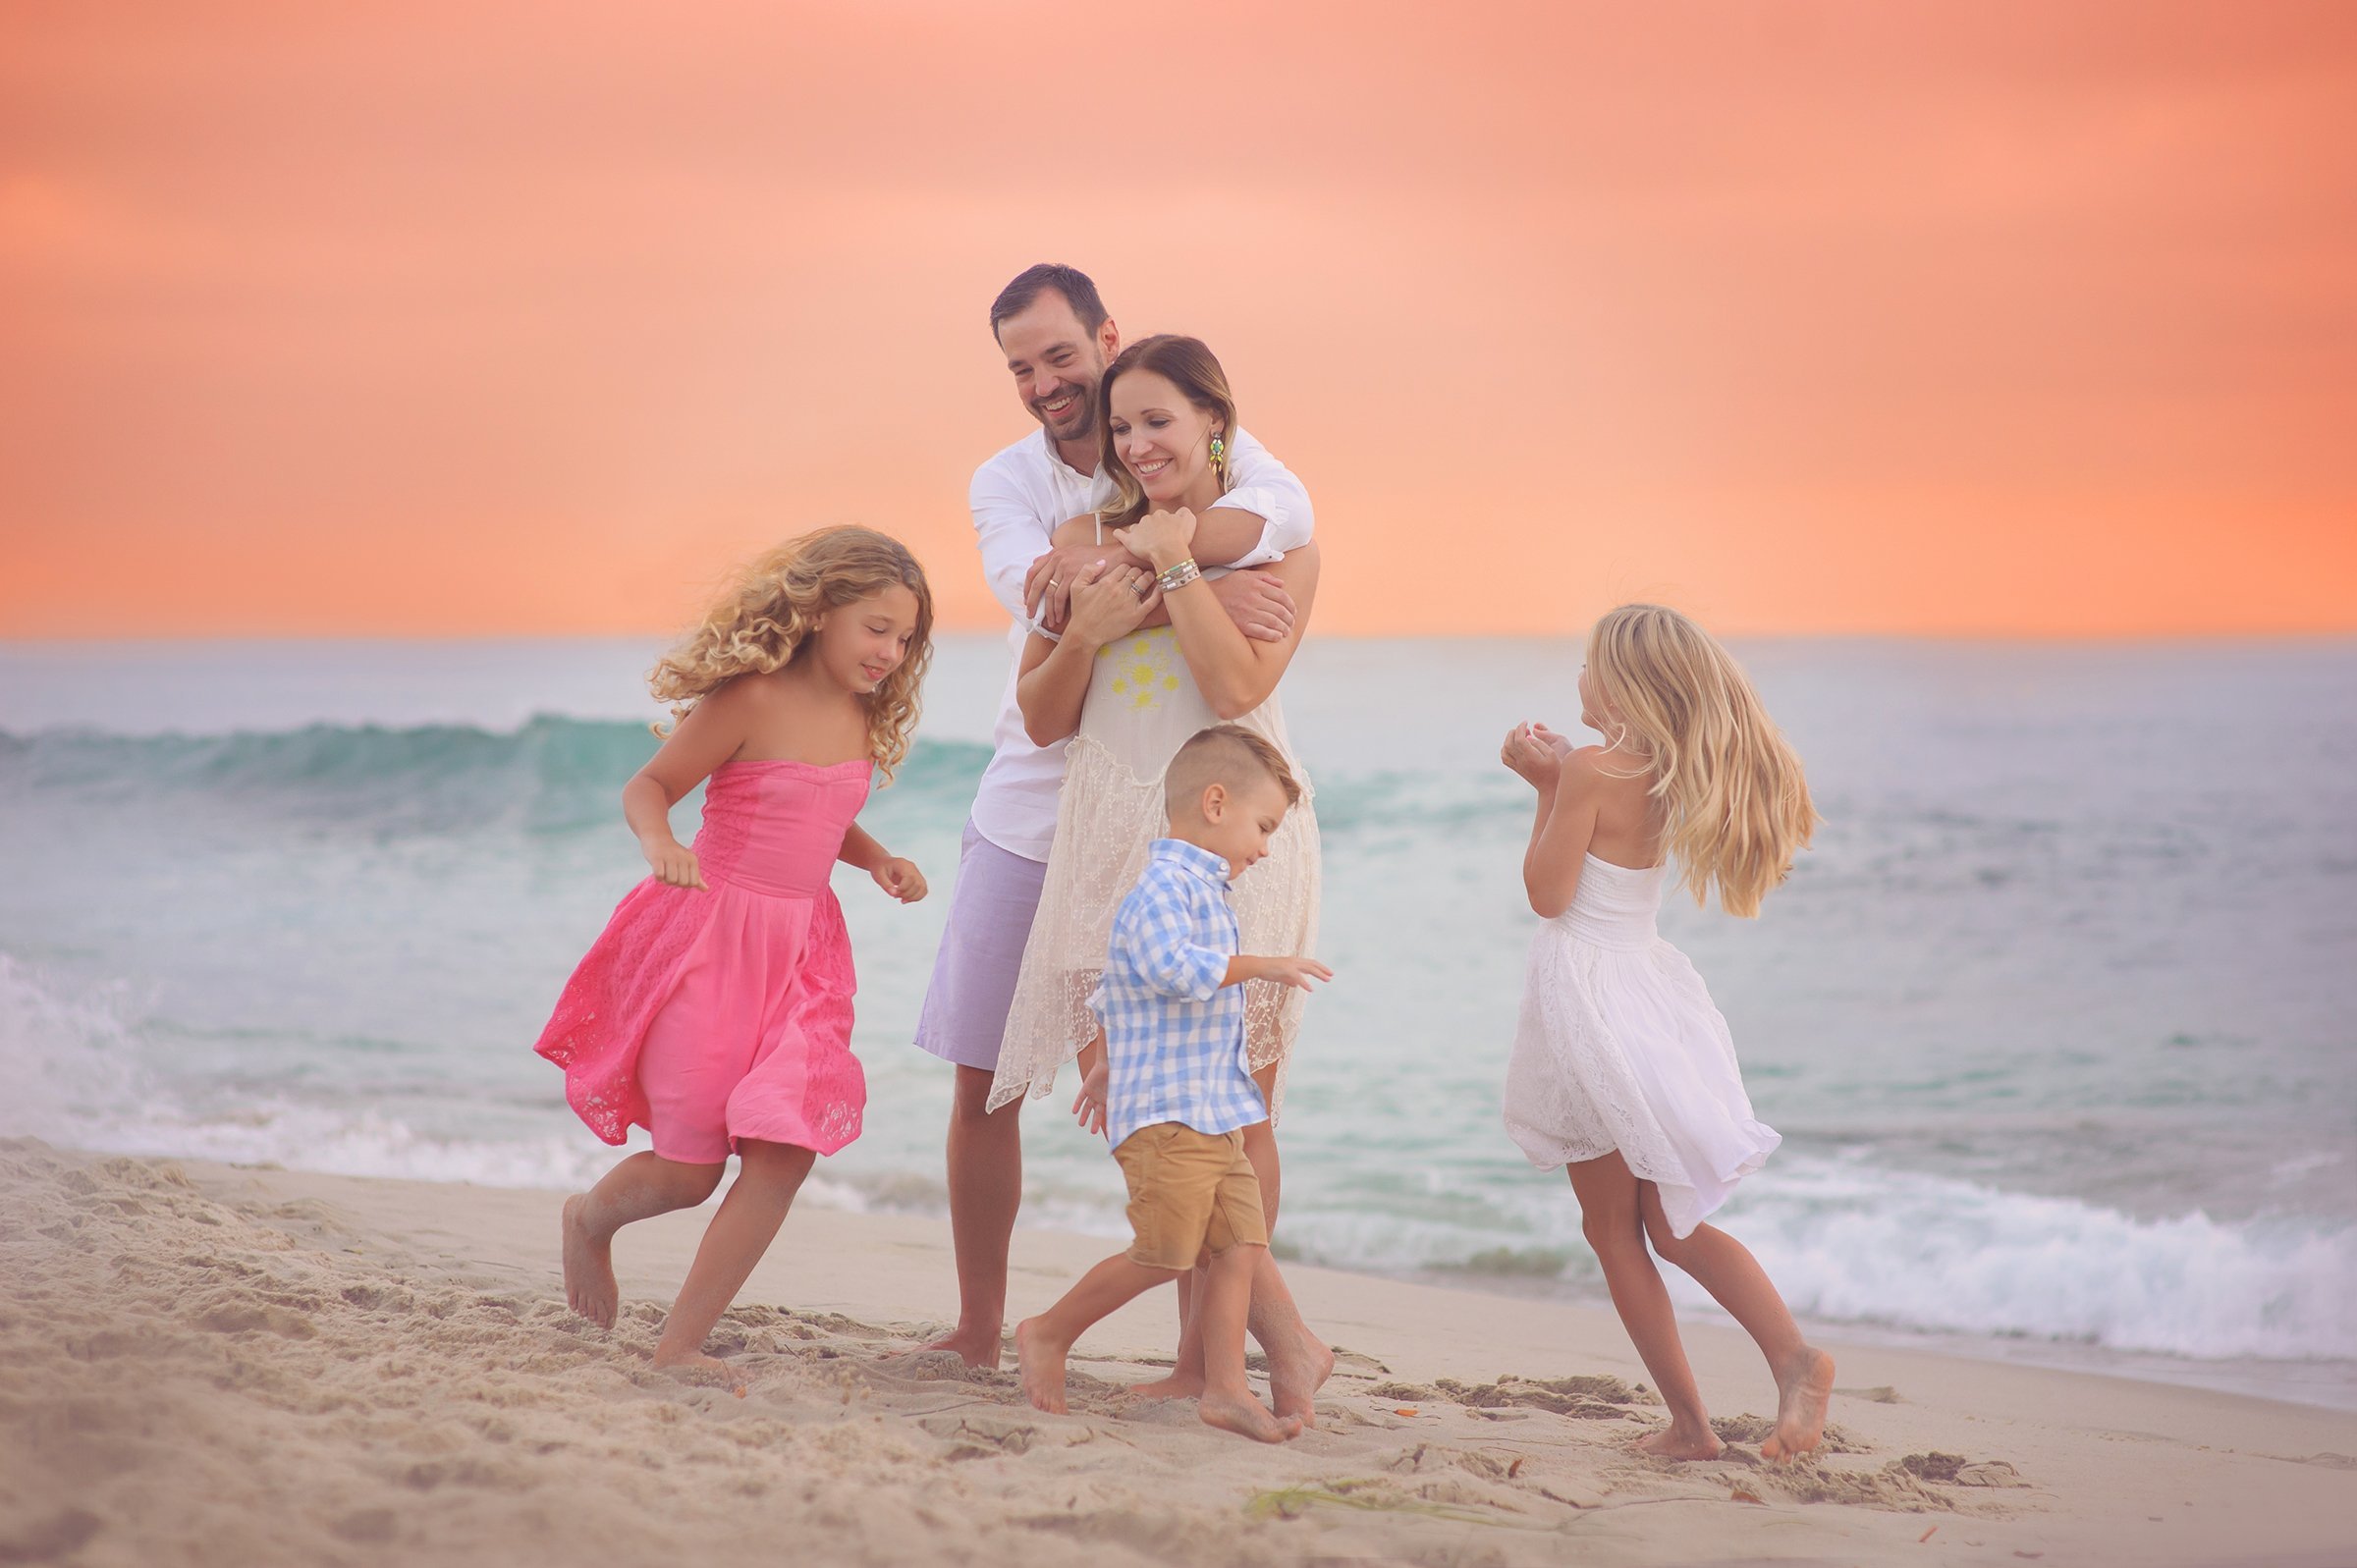 Мама папа на пляже. Семейная фотосессия на море. Фотосессия на берегу моря семейная. Счастливая семья на море. Счастливая семья с детьми на море.